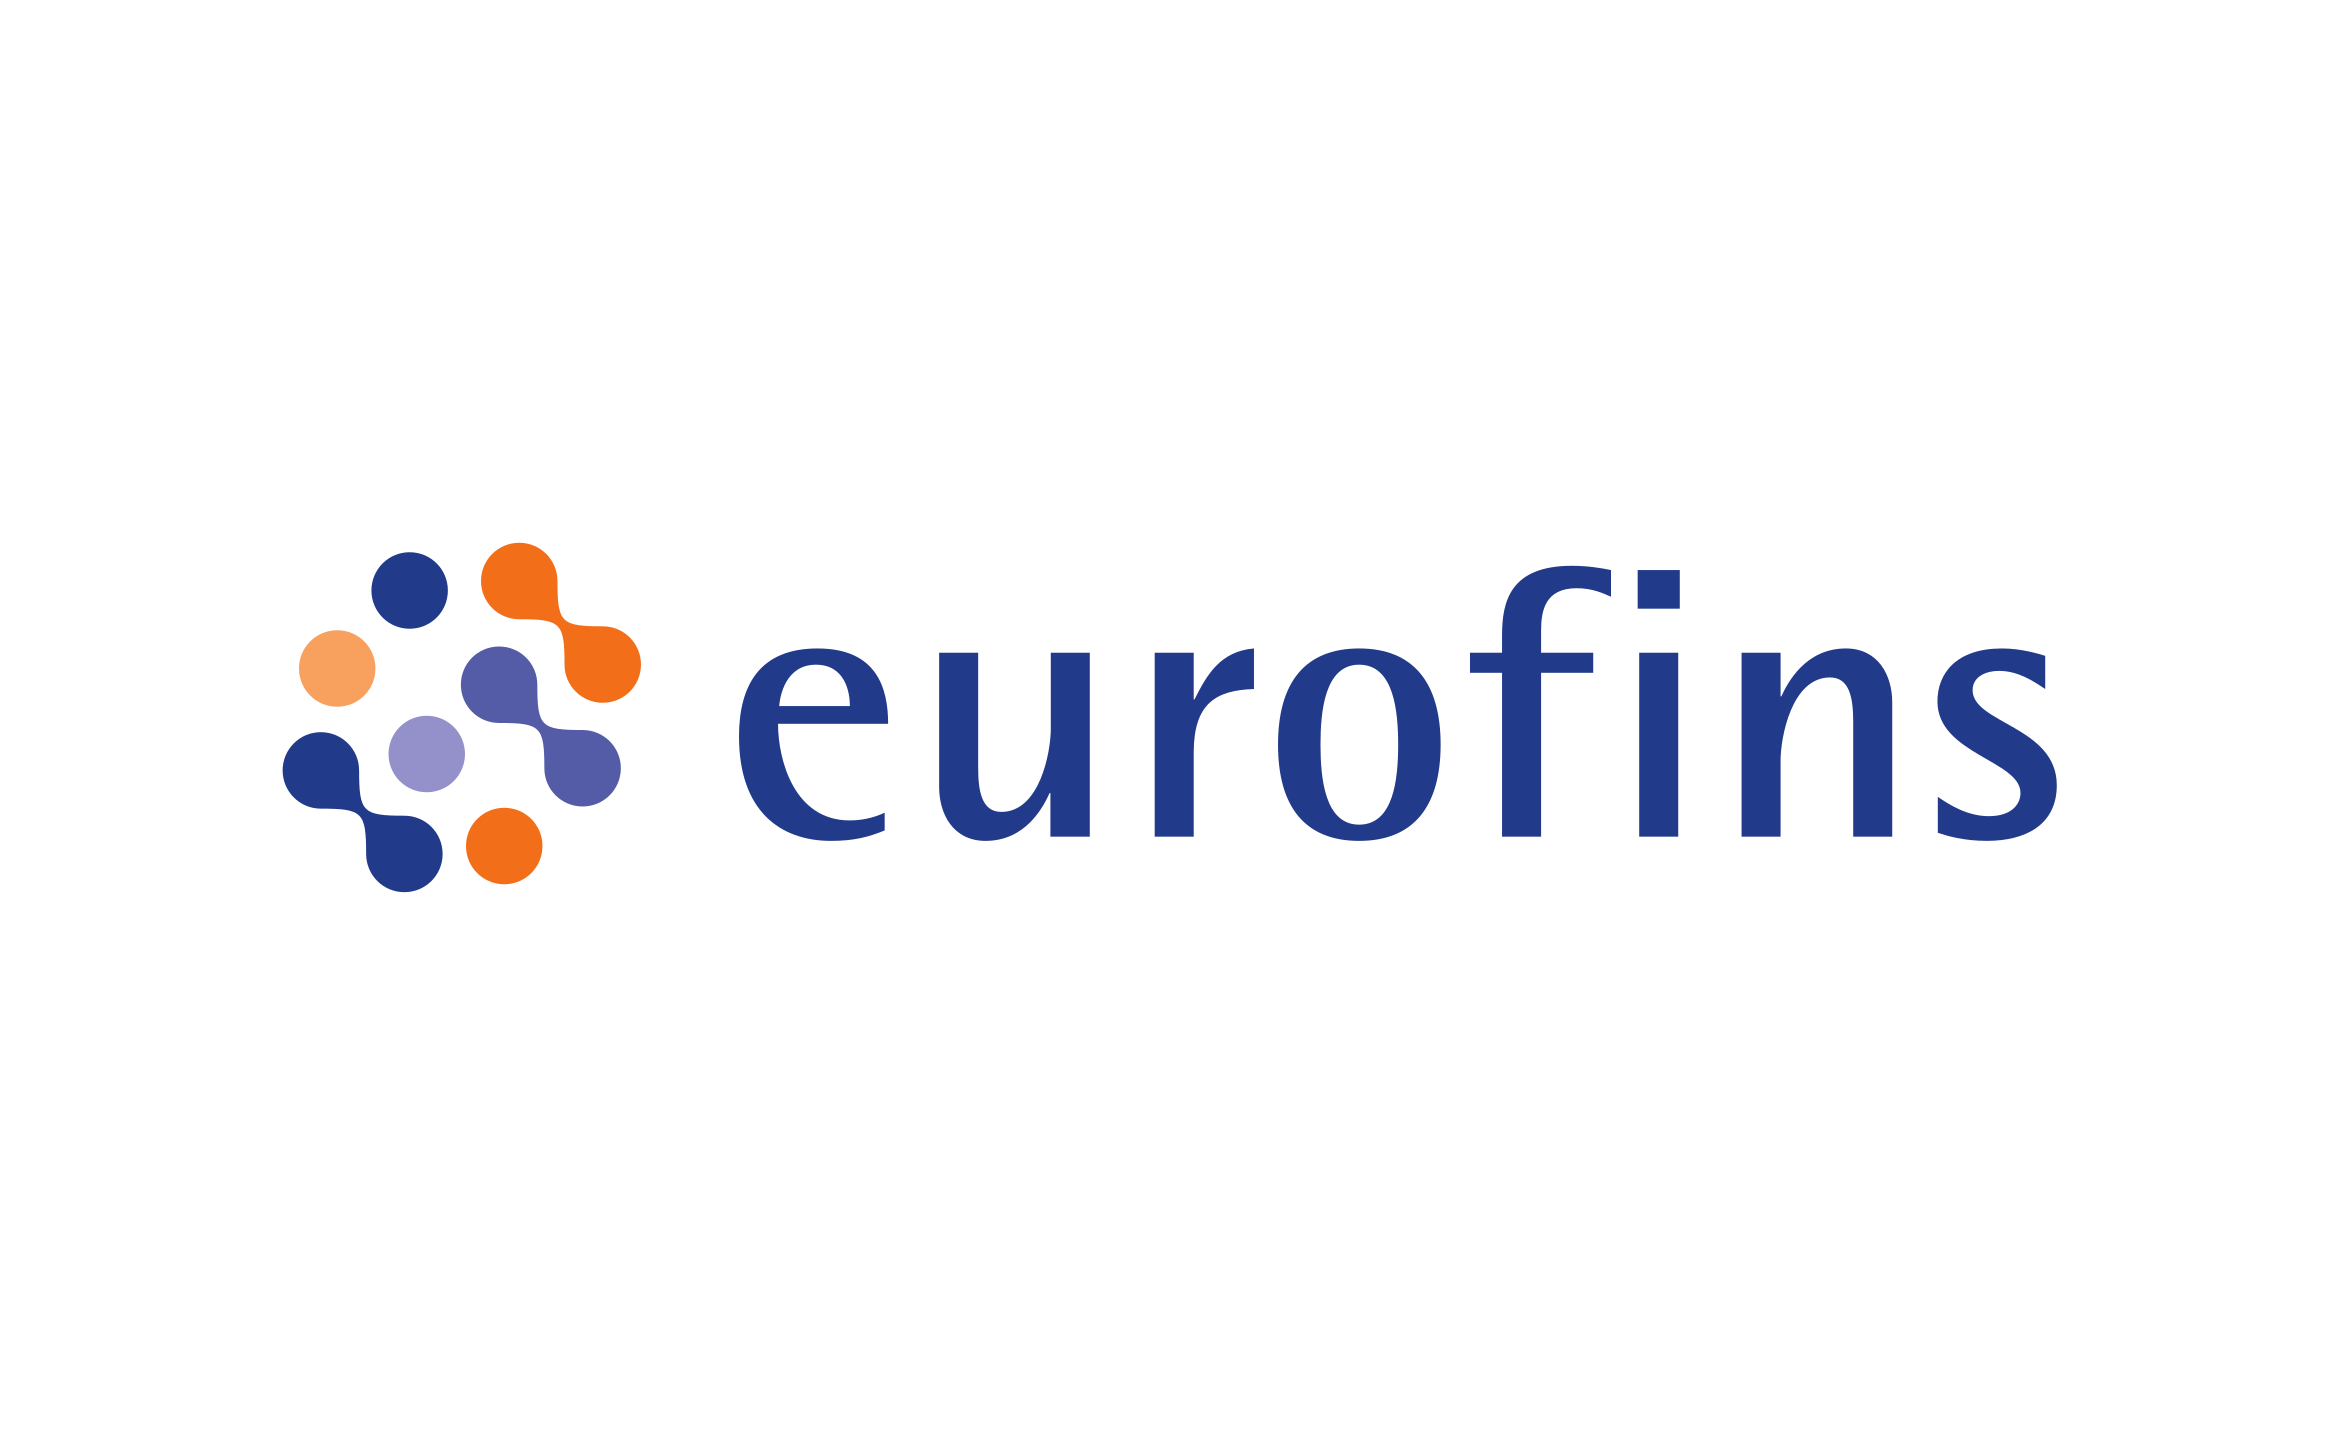 Logo Eurofins